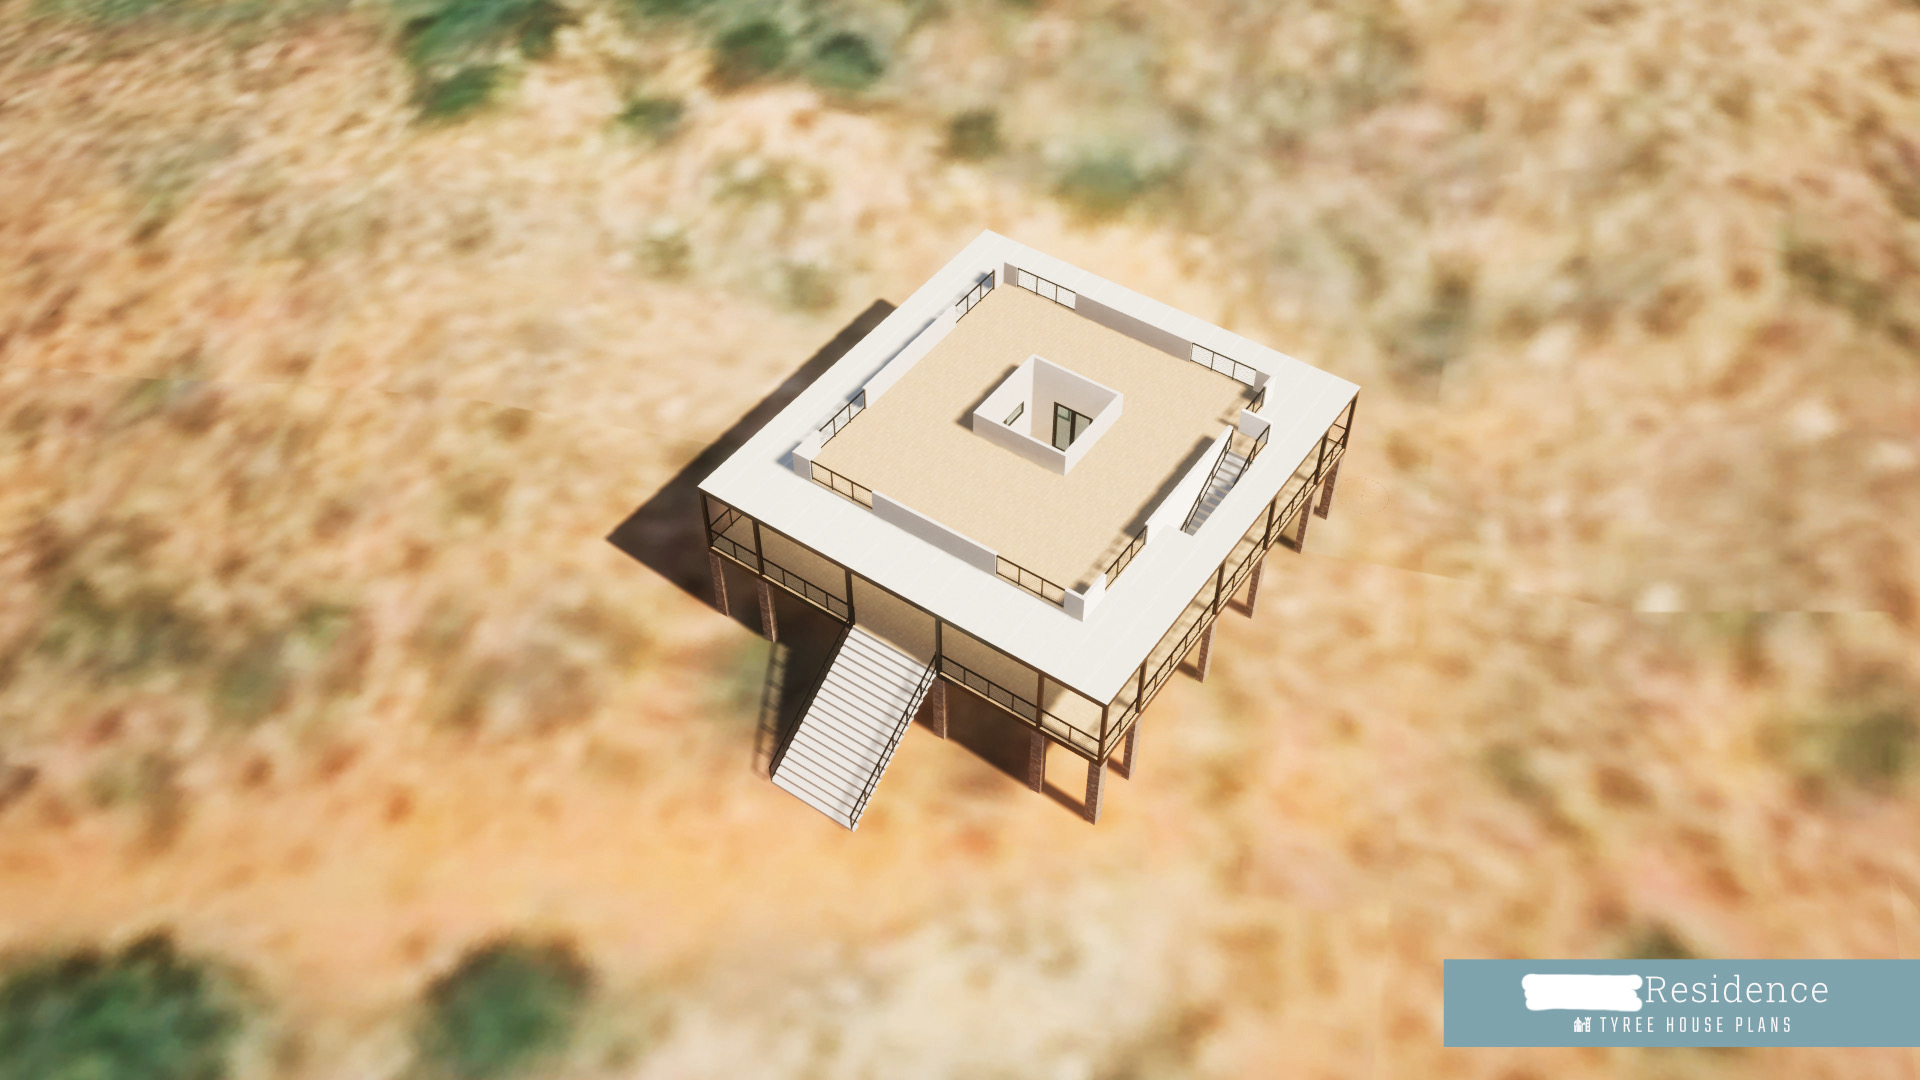 Rooftop 1 - Customized Sahara House Plan in Arizona, US